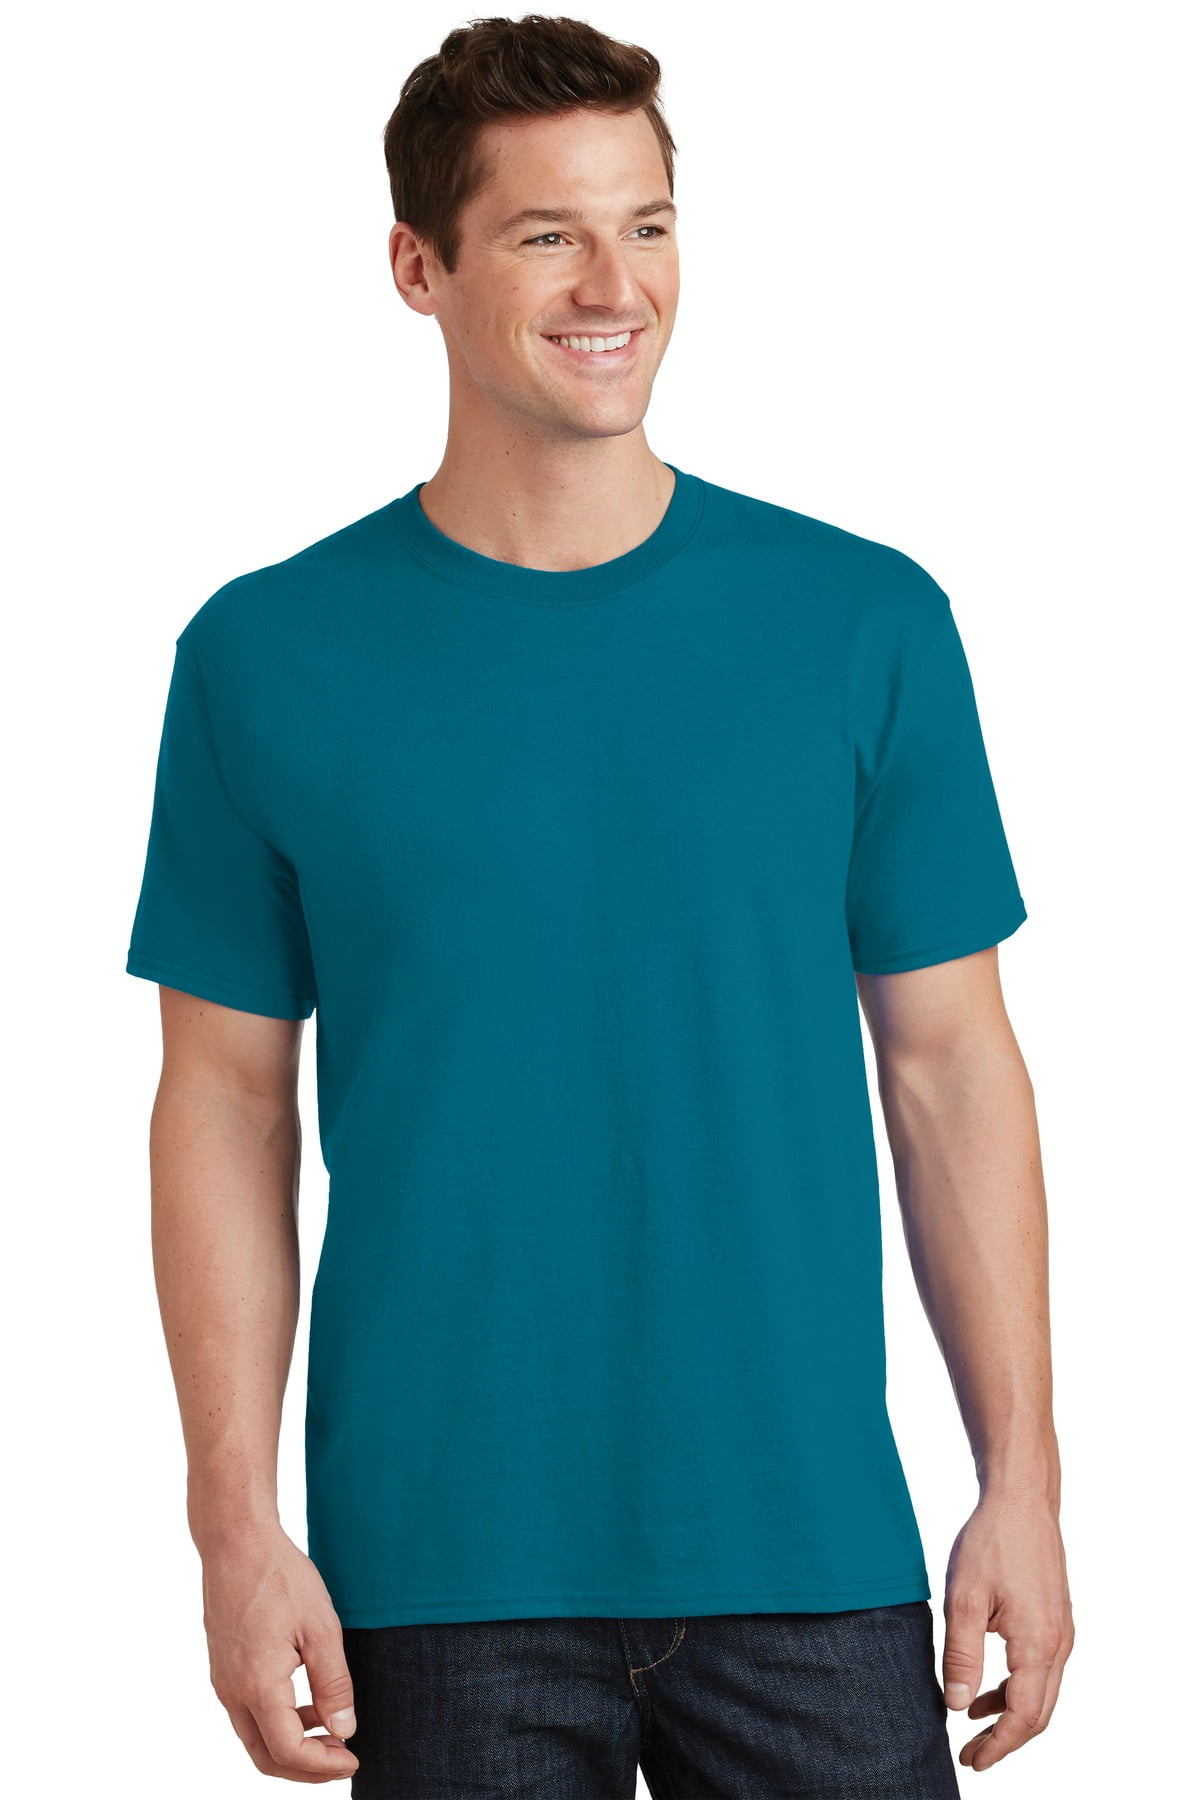 Port & Co Adult Male Men Crew Neck Plain Short Sleeves T-Shirt Teal ...